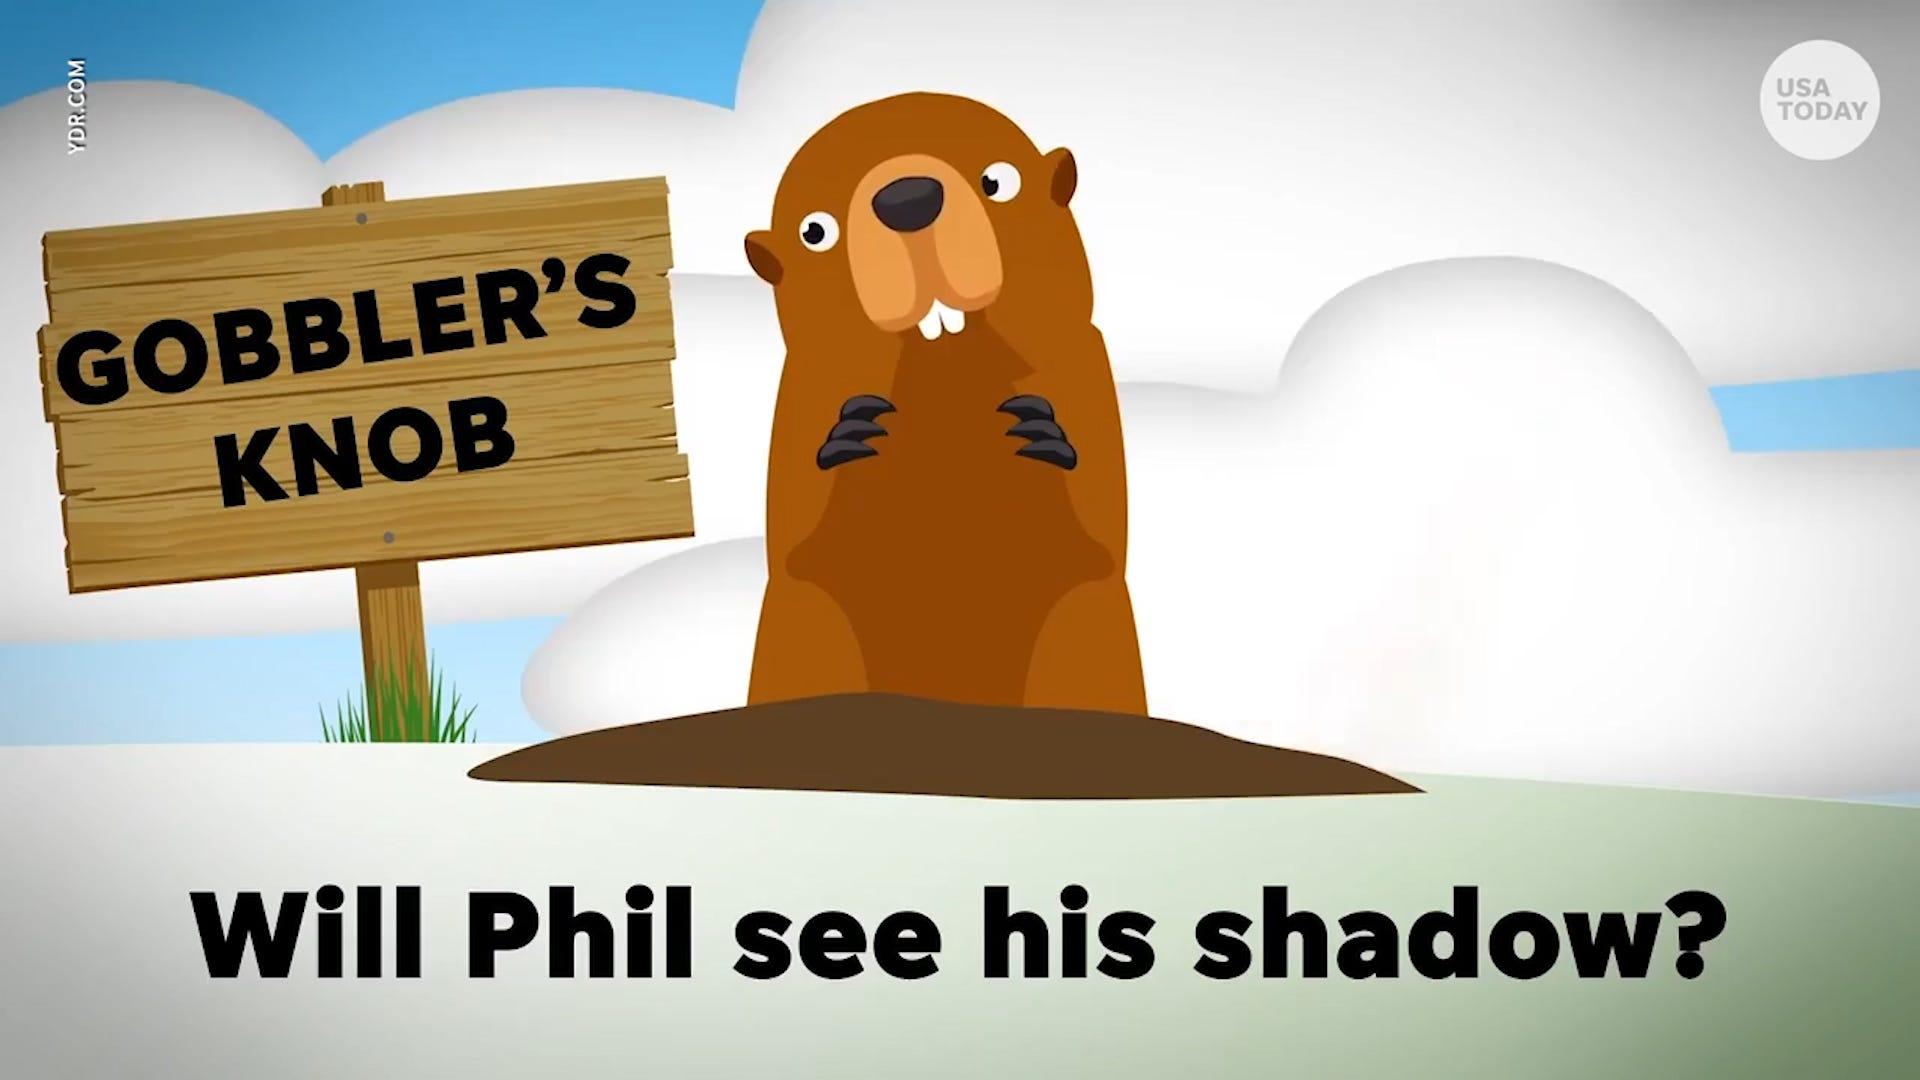 Groundhog Day 2020 weather: Will Punxsutawney Phil see his